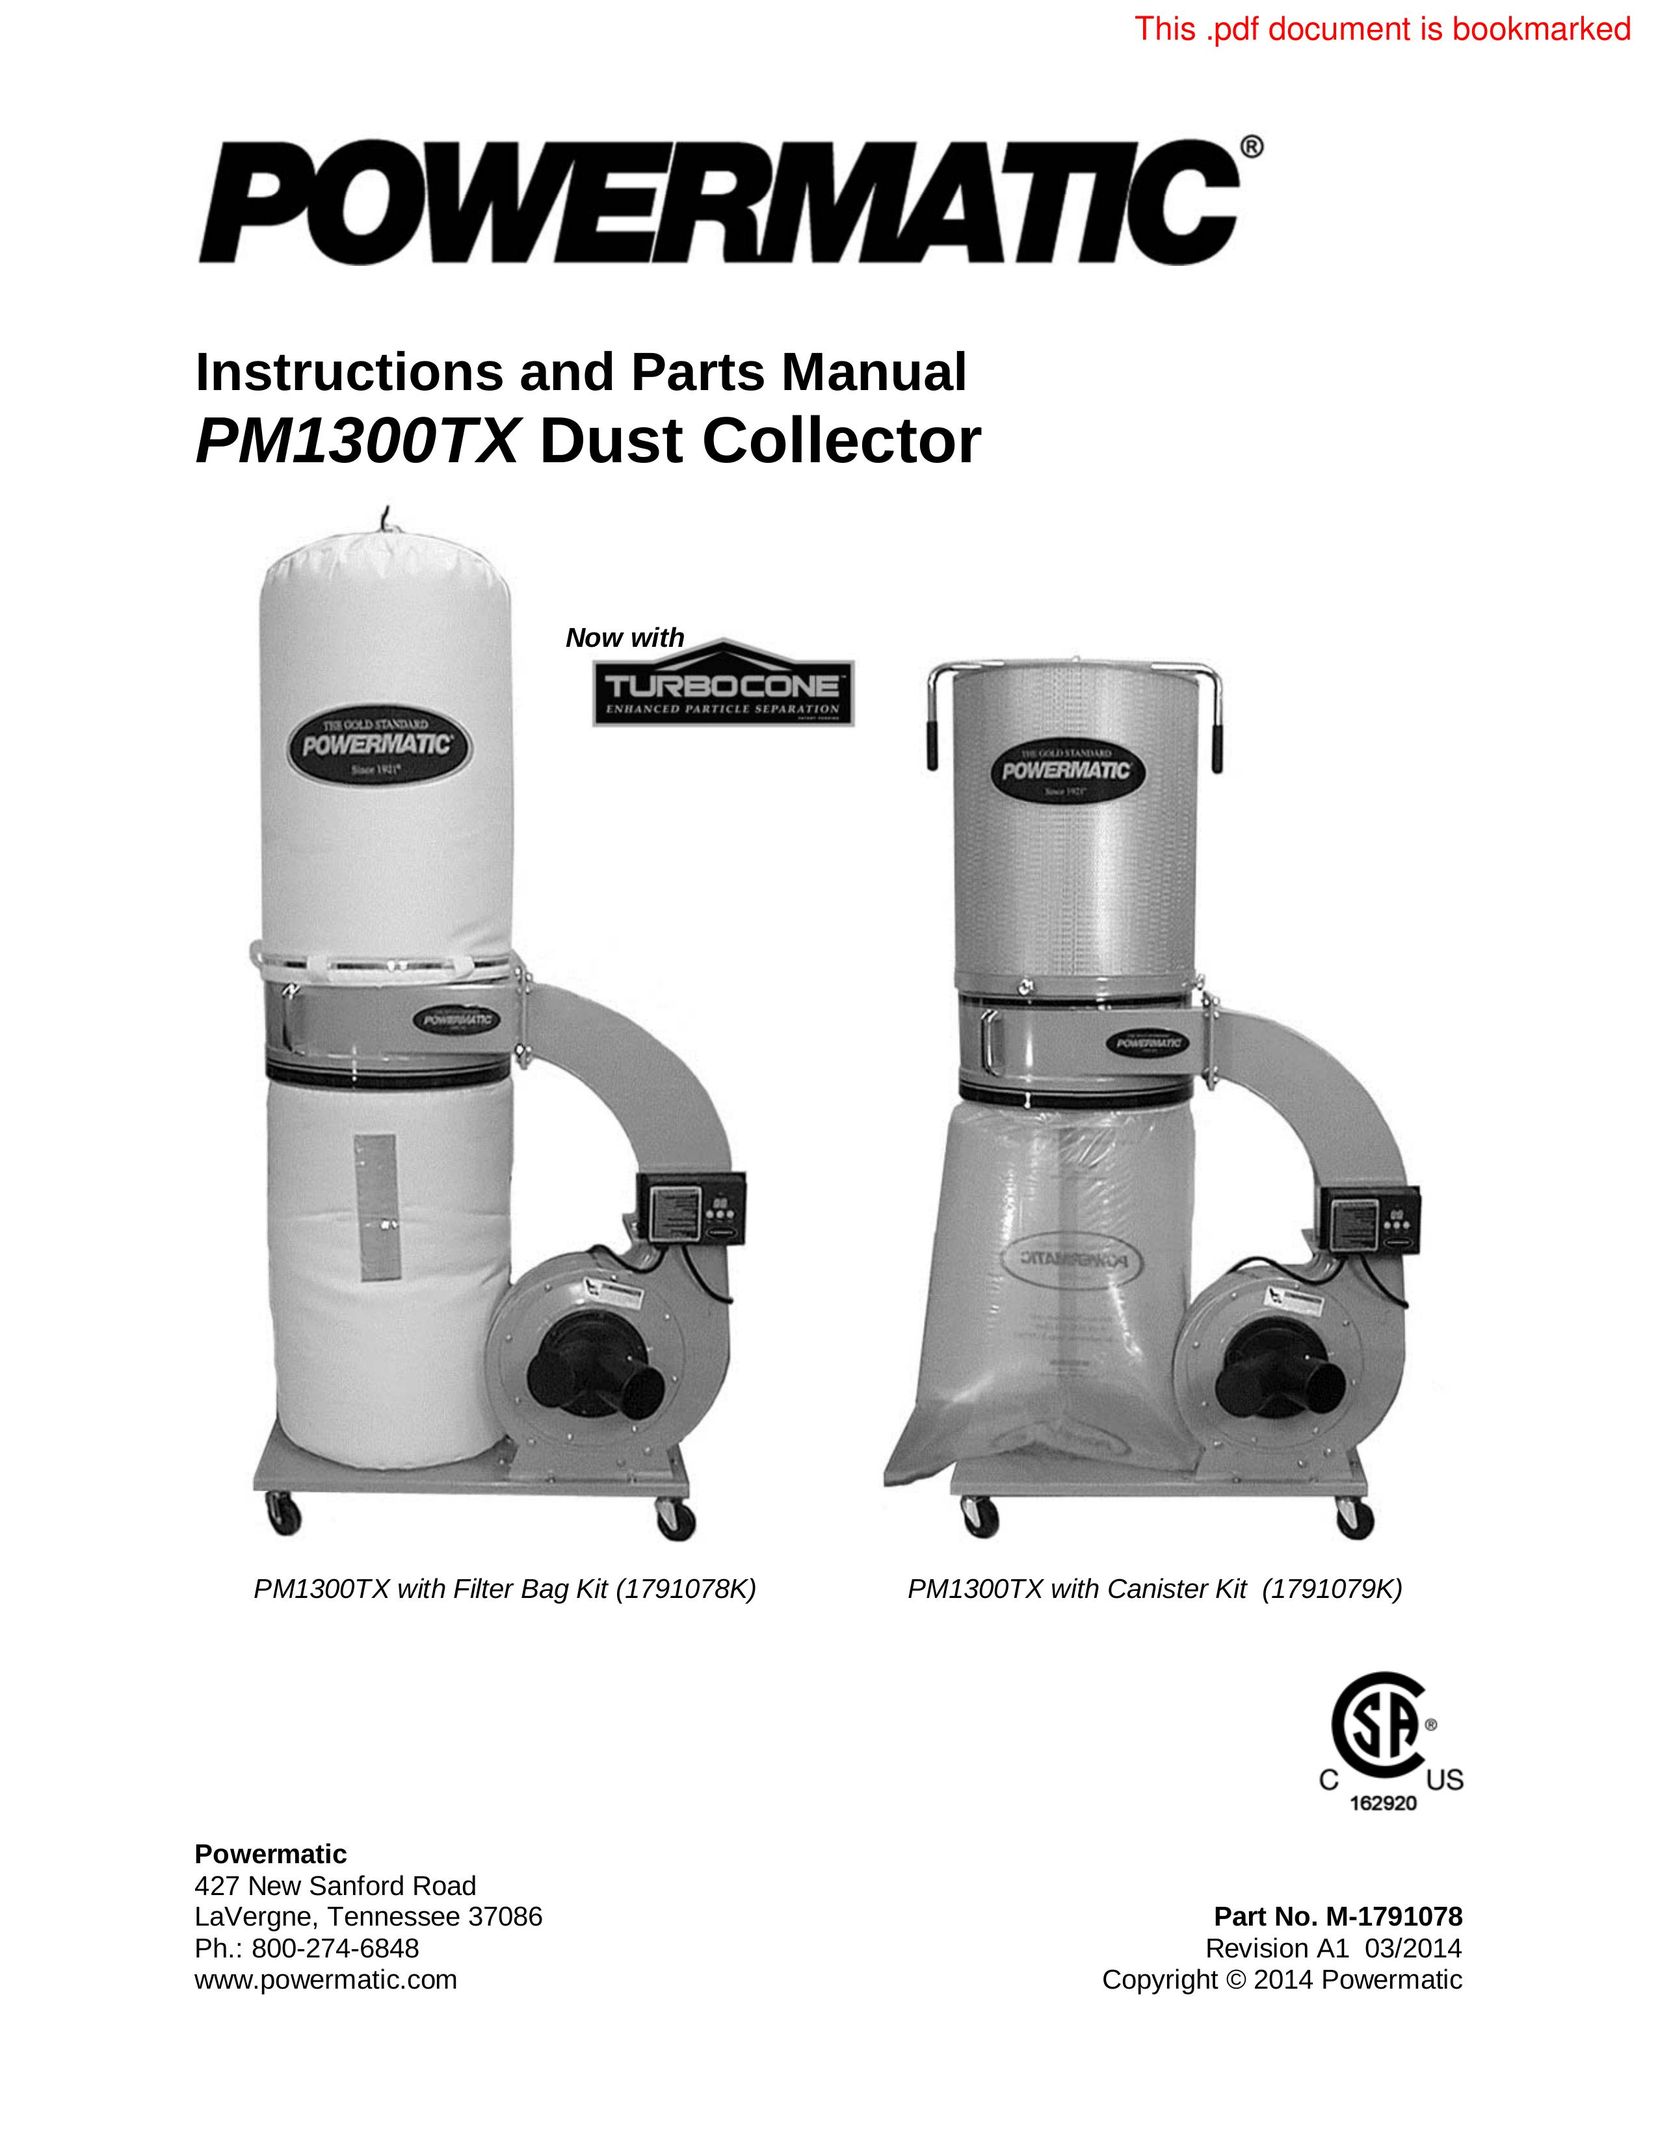 Powermatic PM1300TX Dust Collector User Manual